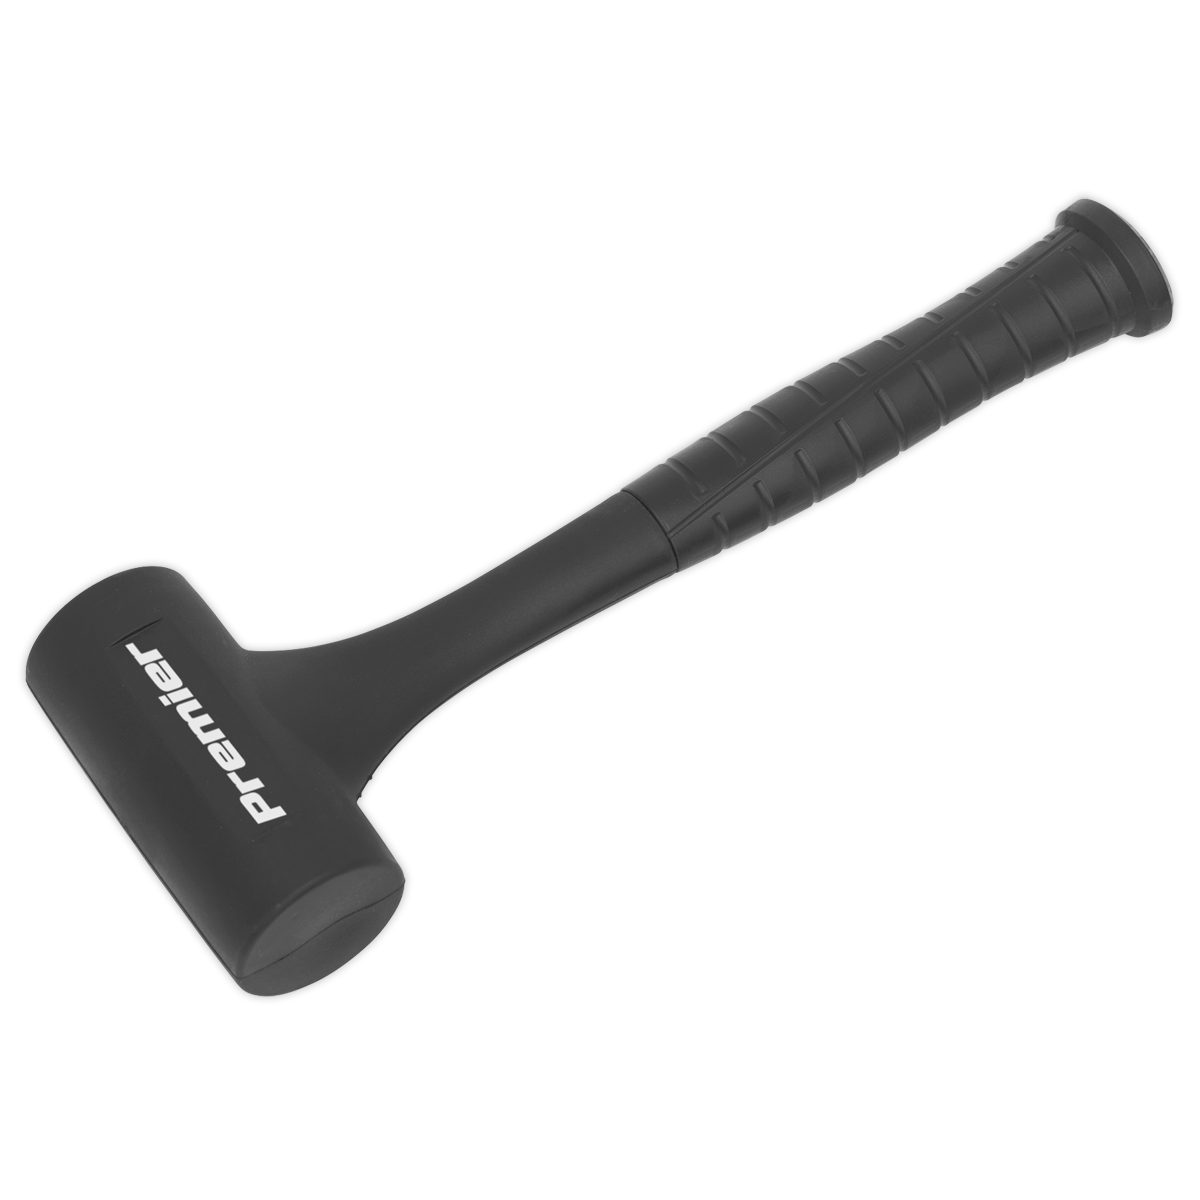 Dead Blow Hammer 1.3lb - DBH630 - Farming Parts